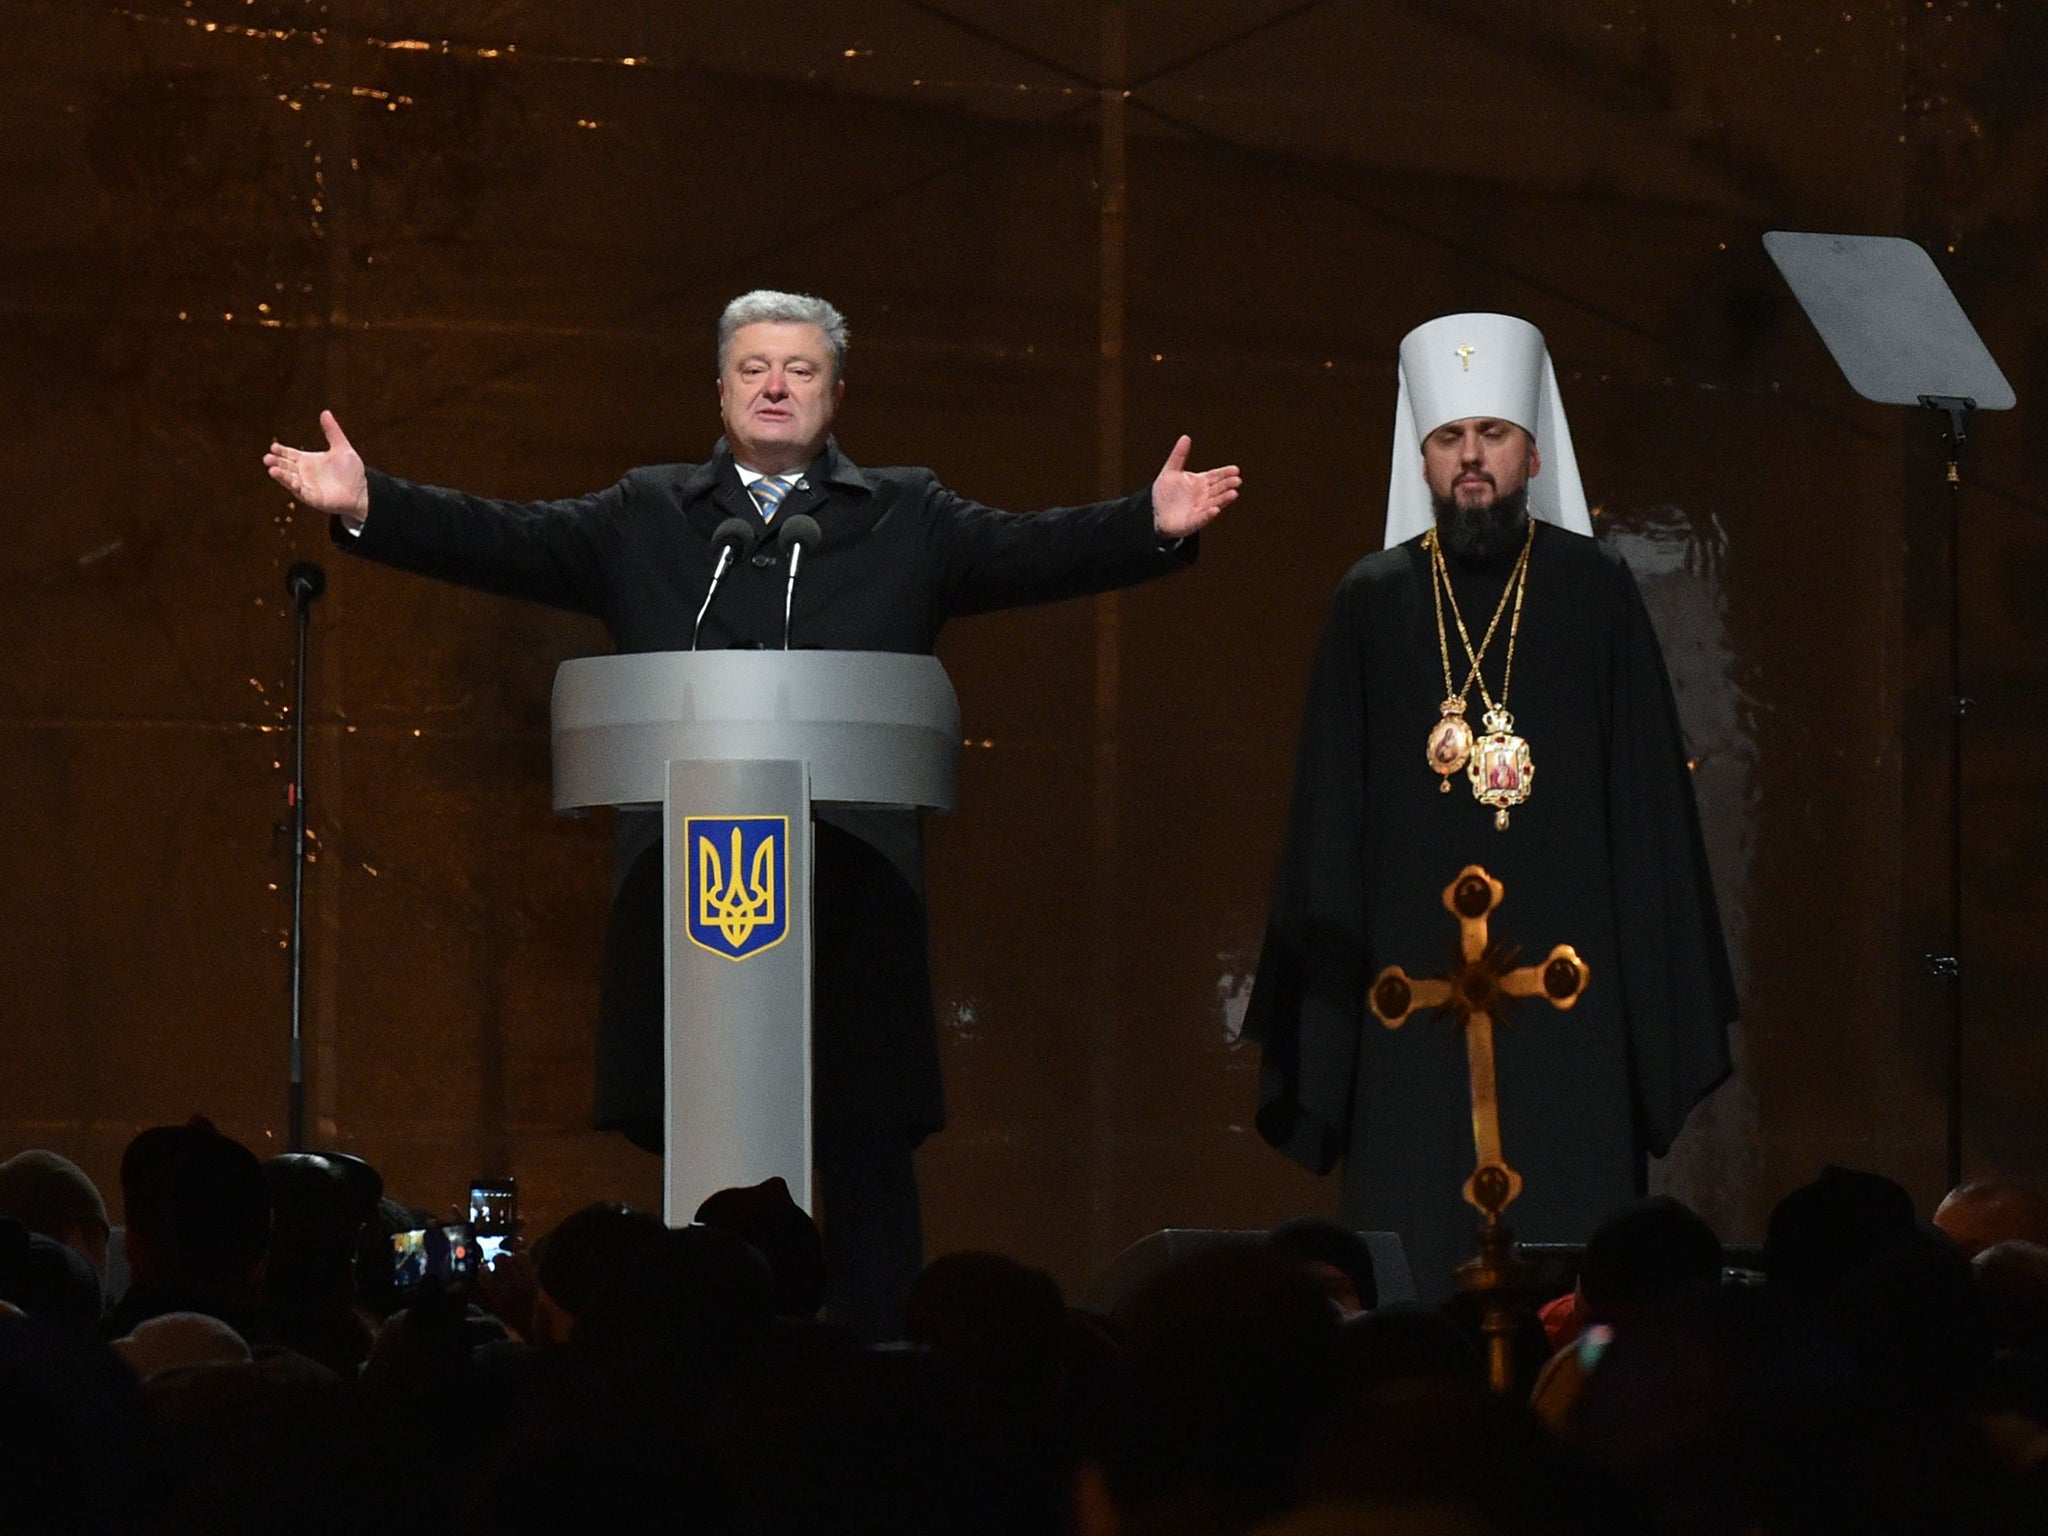 Ukraine's leader celebrates the historic split from Moscow Orthodoxy